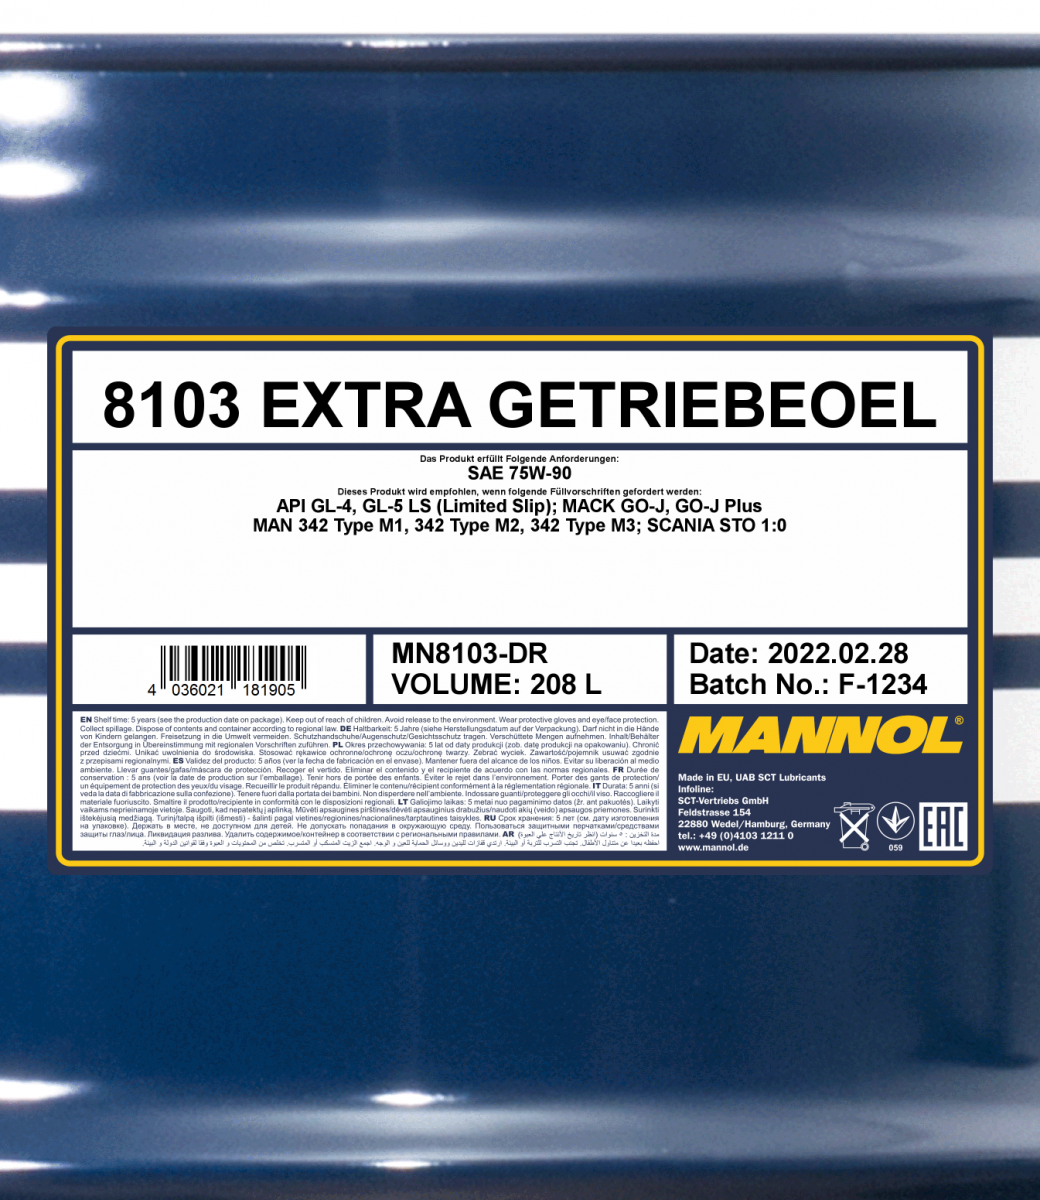 75W-90 Mannol 8103 Extra Getriebeöl 208 Liter